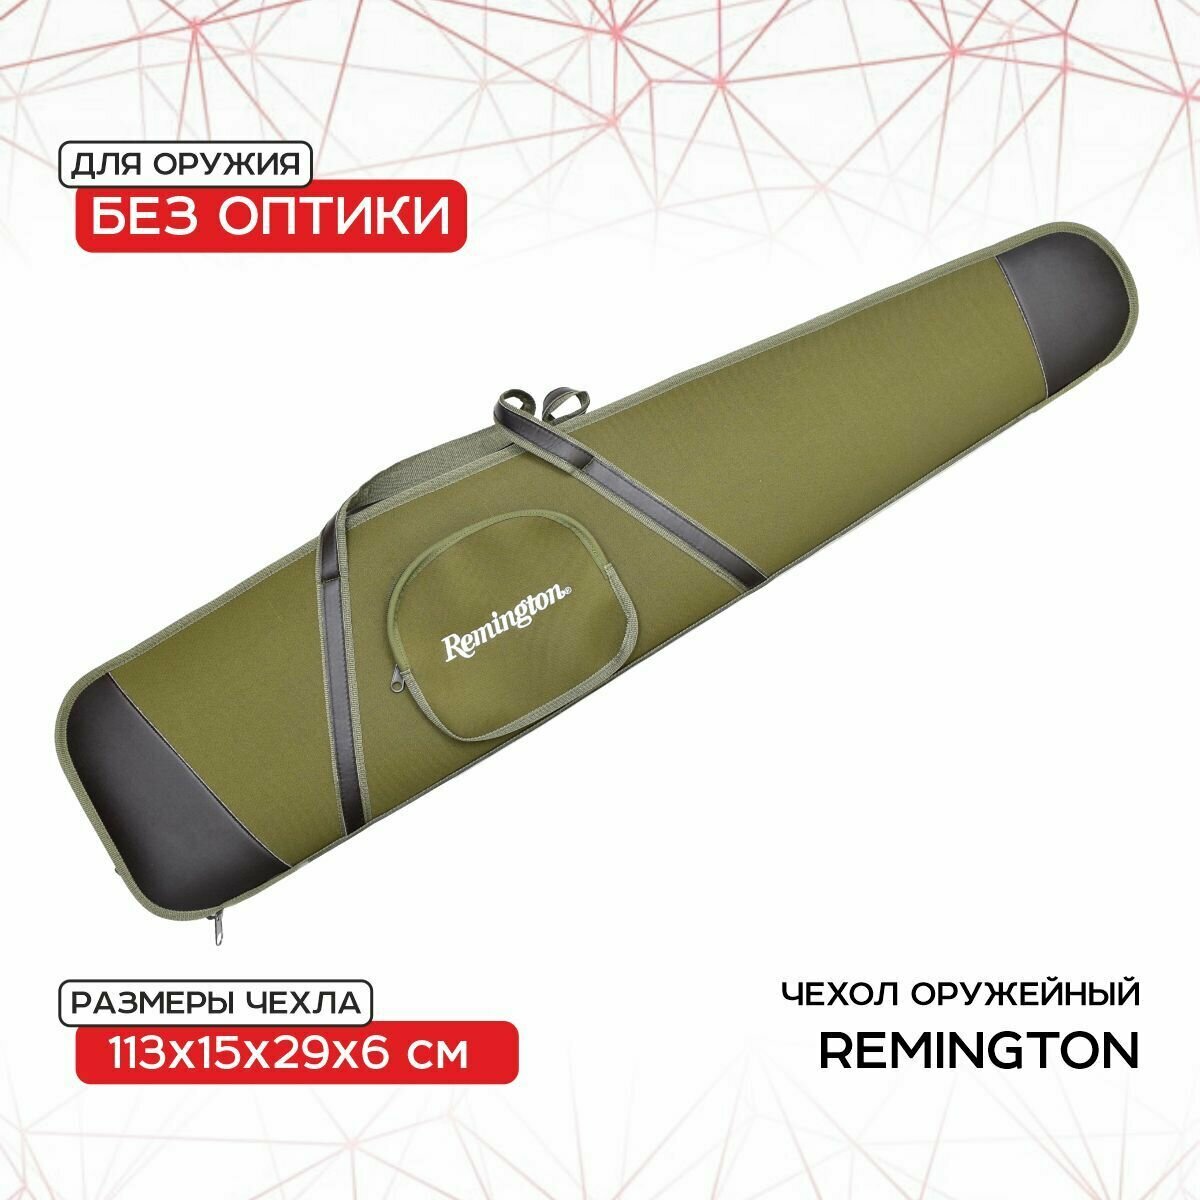 Чехол оружейный Remington без оптики 113х15х29х6 (зеленый) GB-9050B113